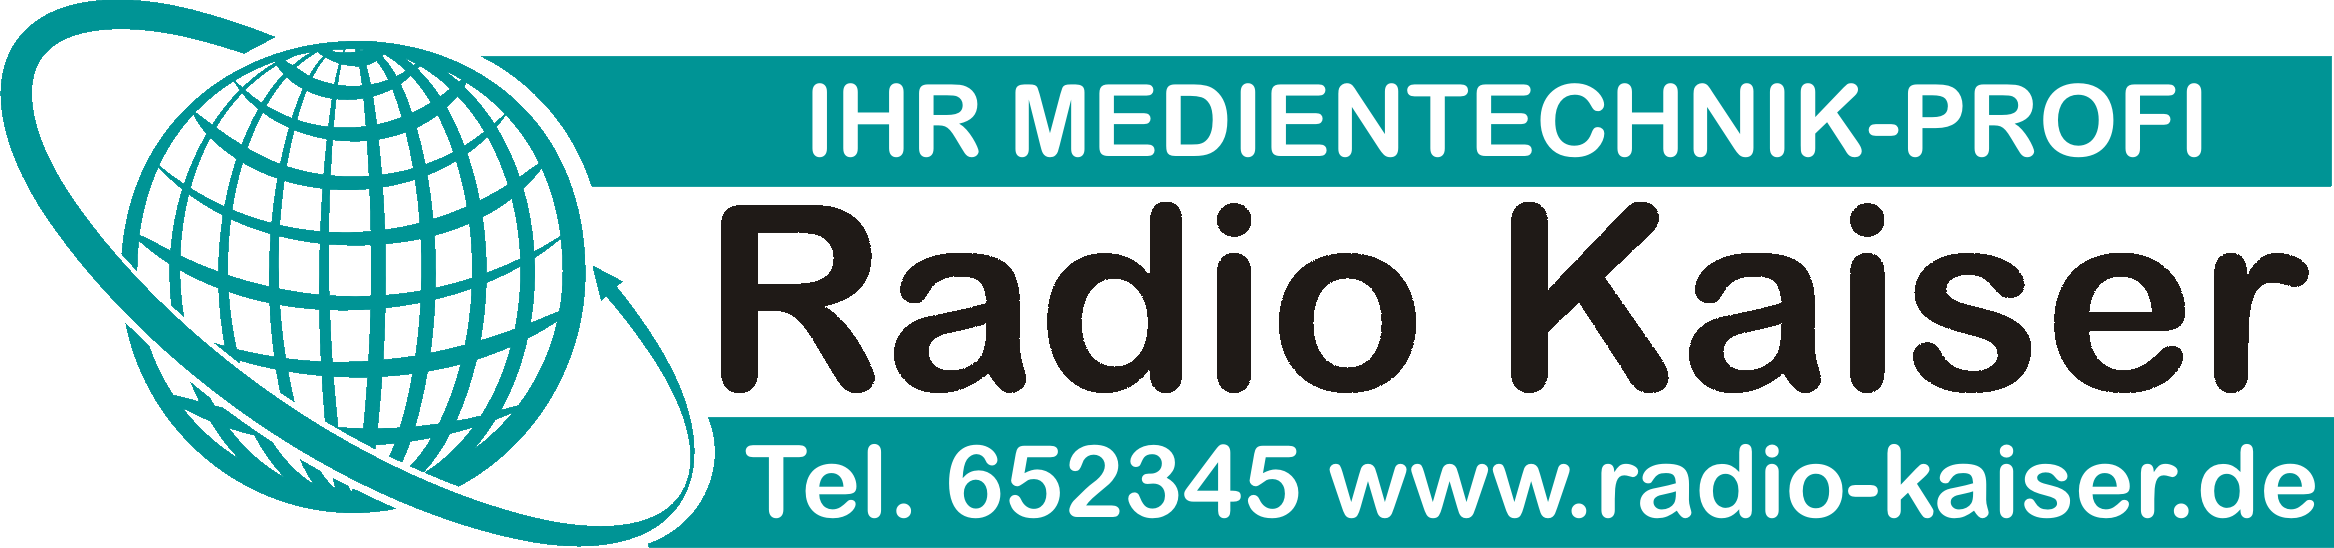 Radio Kaiser Logo